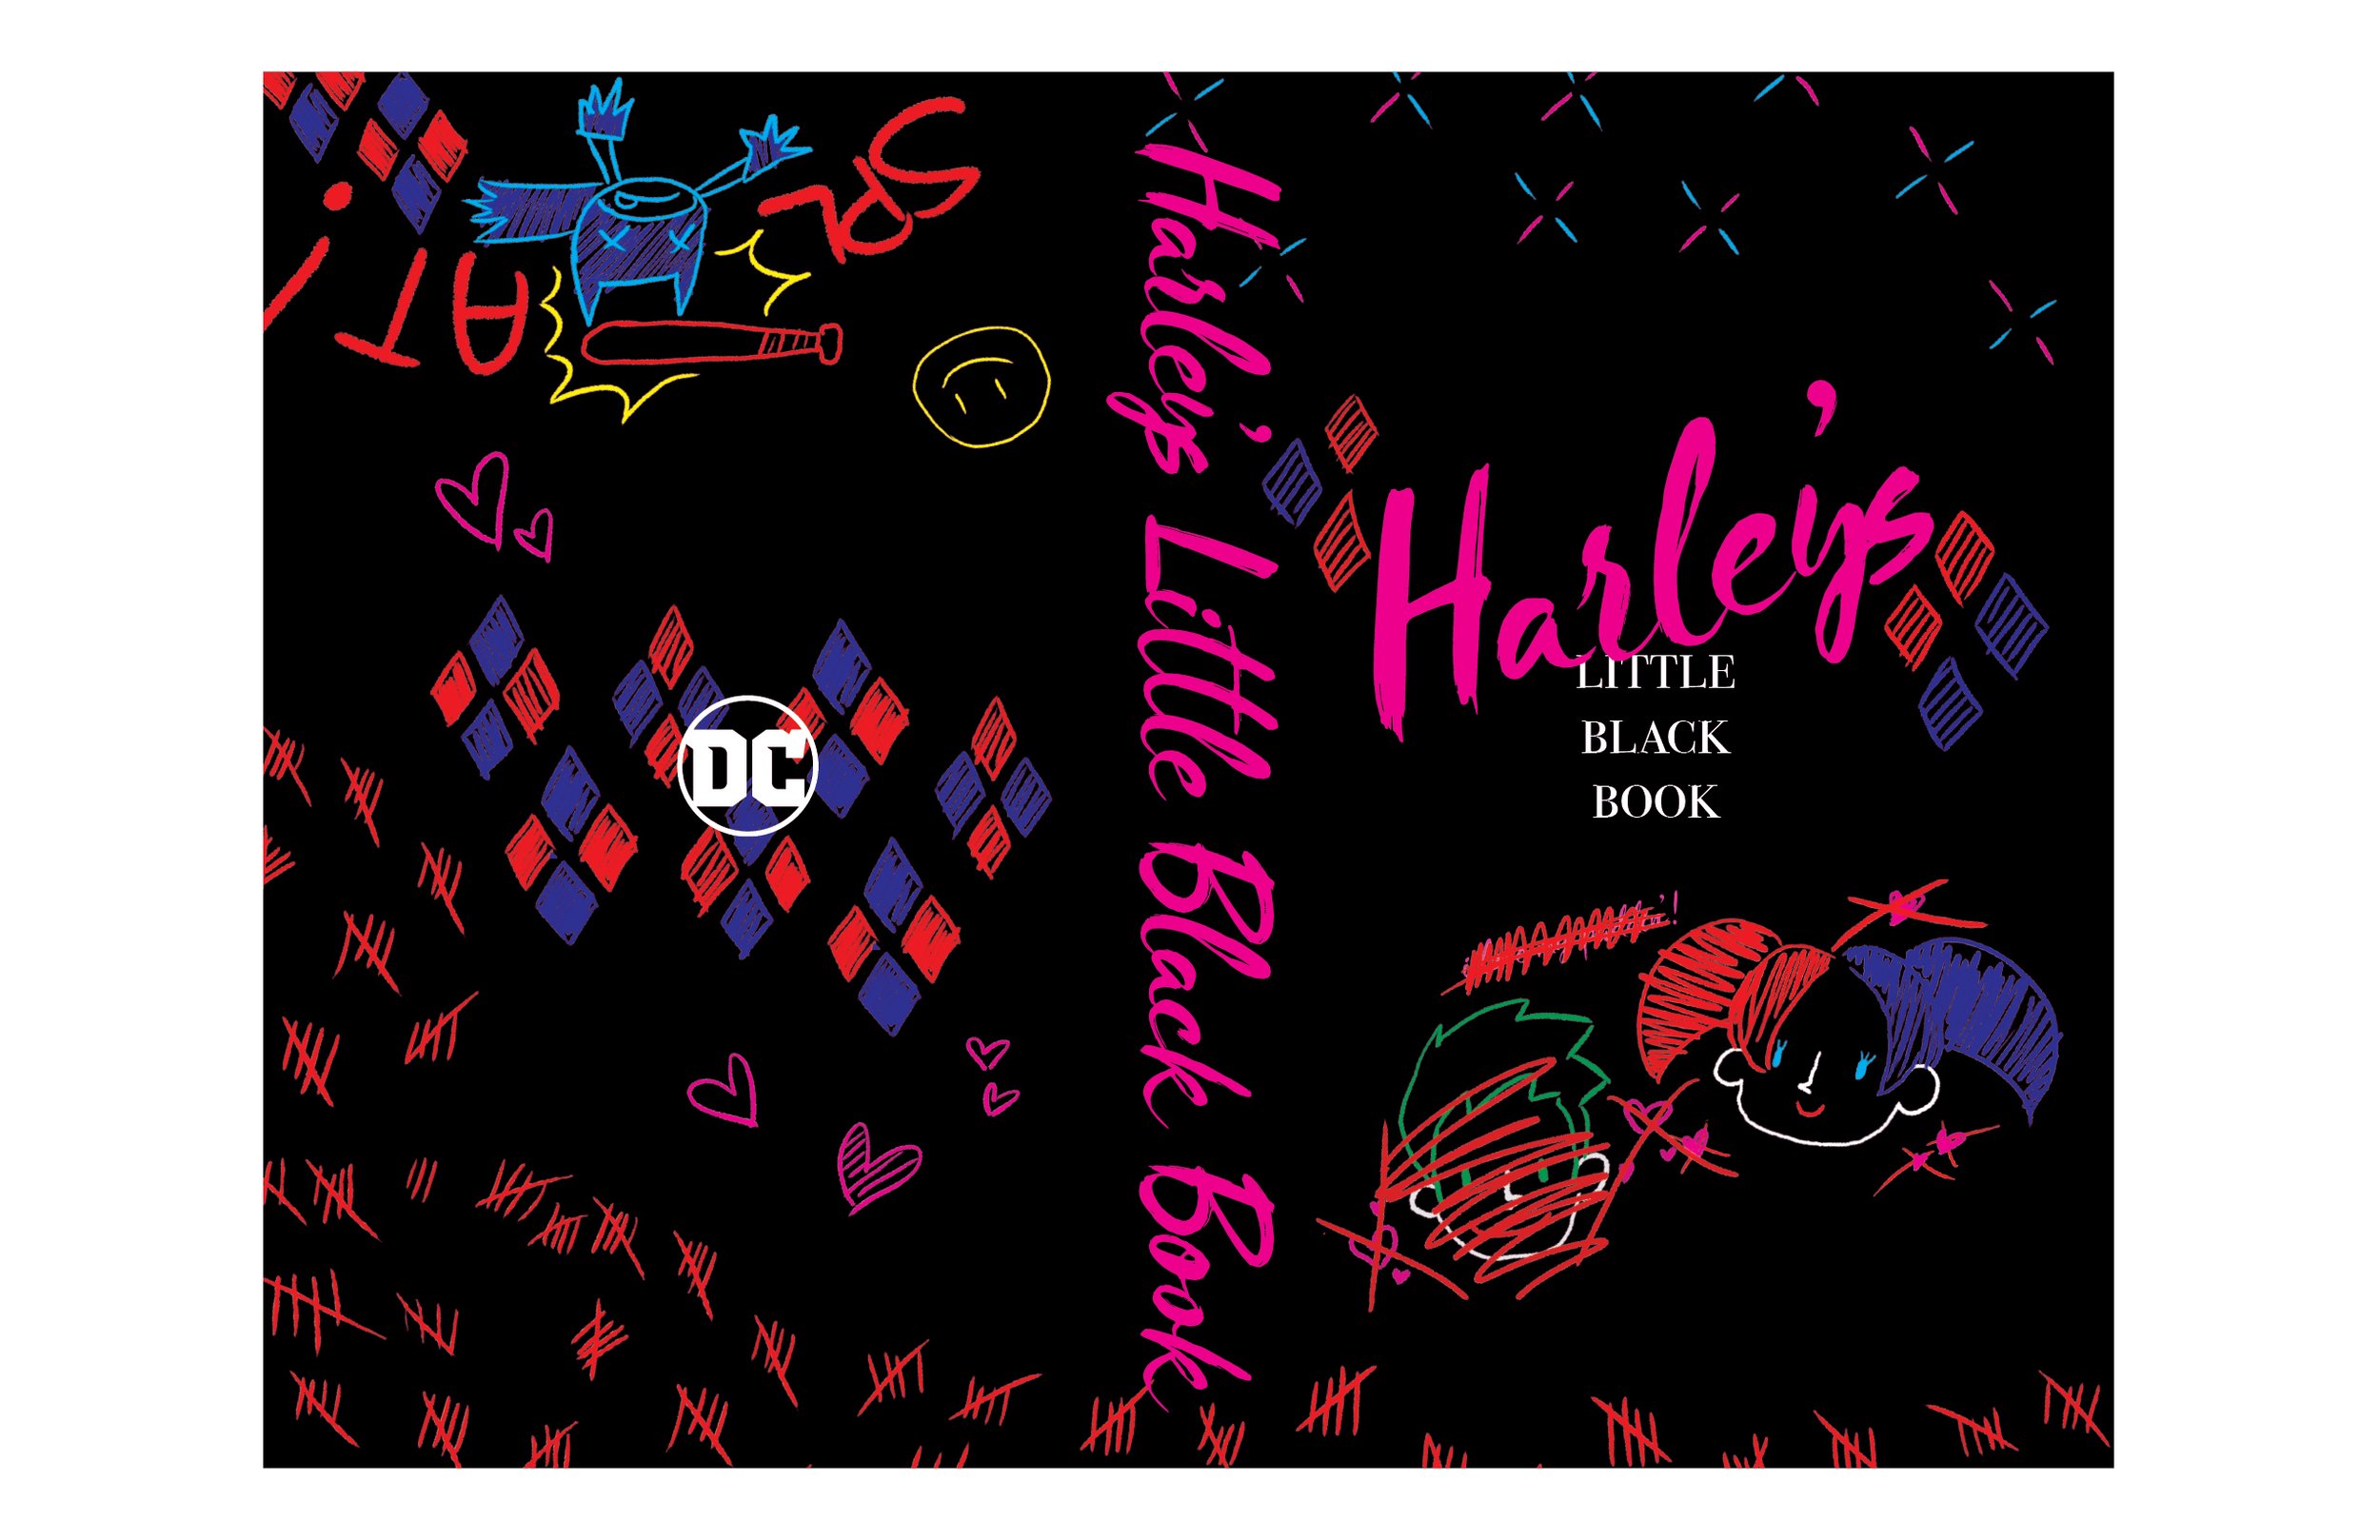 Harley's Little Black Book Hardcover